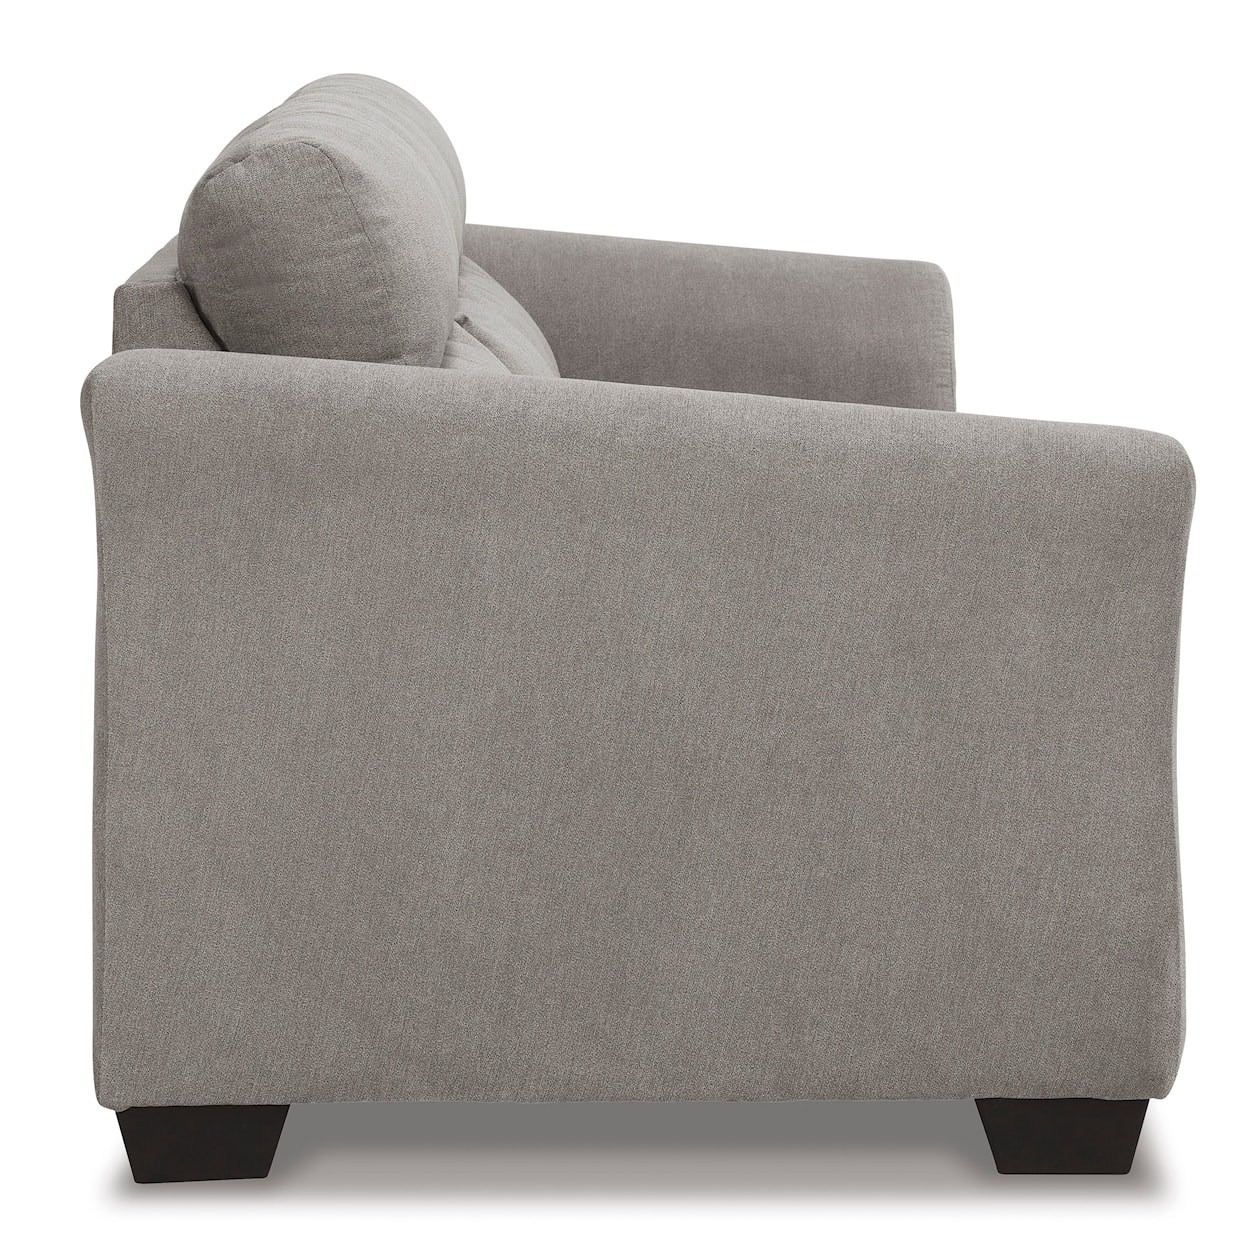 Ashley Furniture Signature Design Miravel Sofa Sleeper